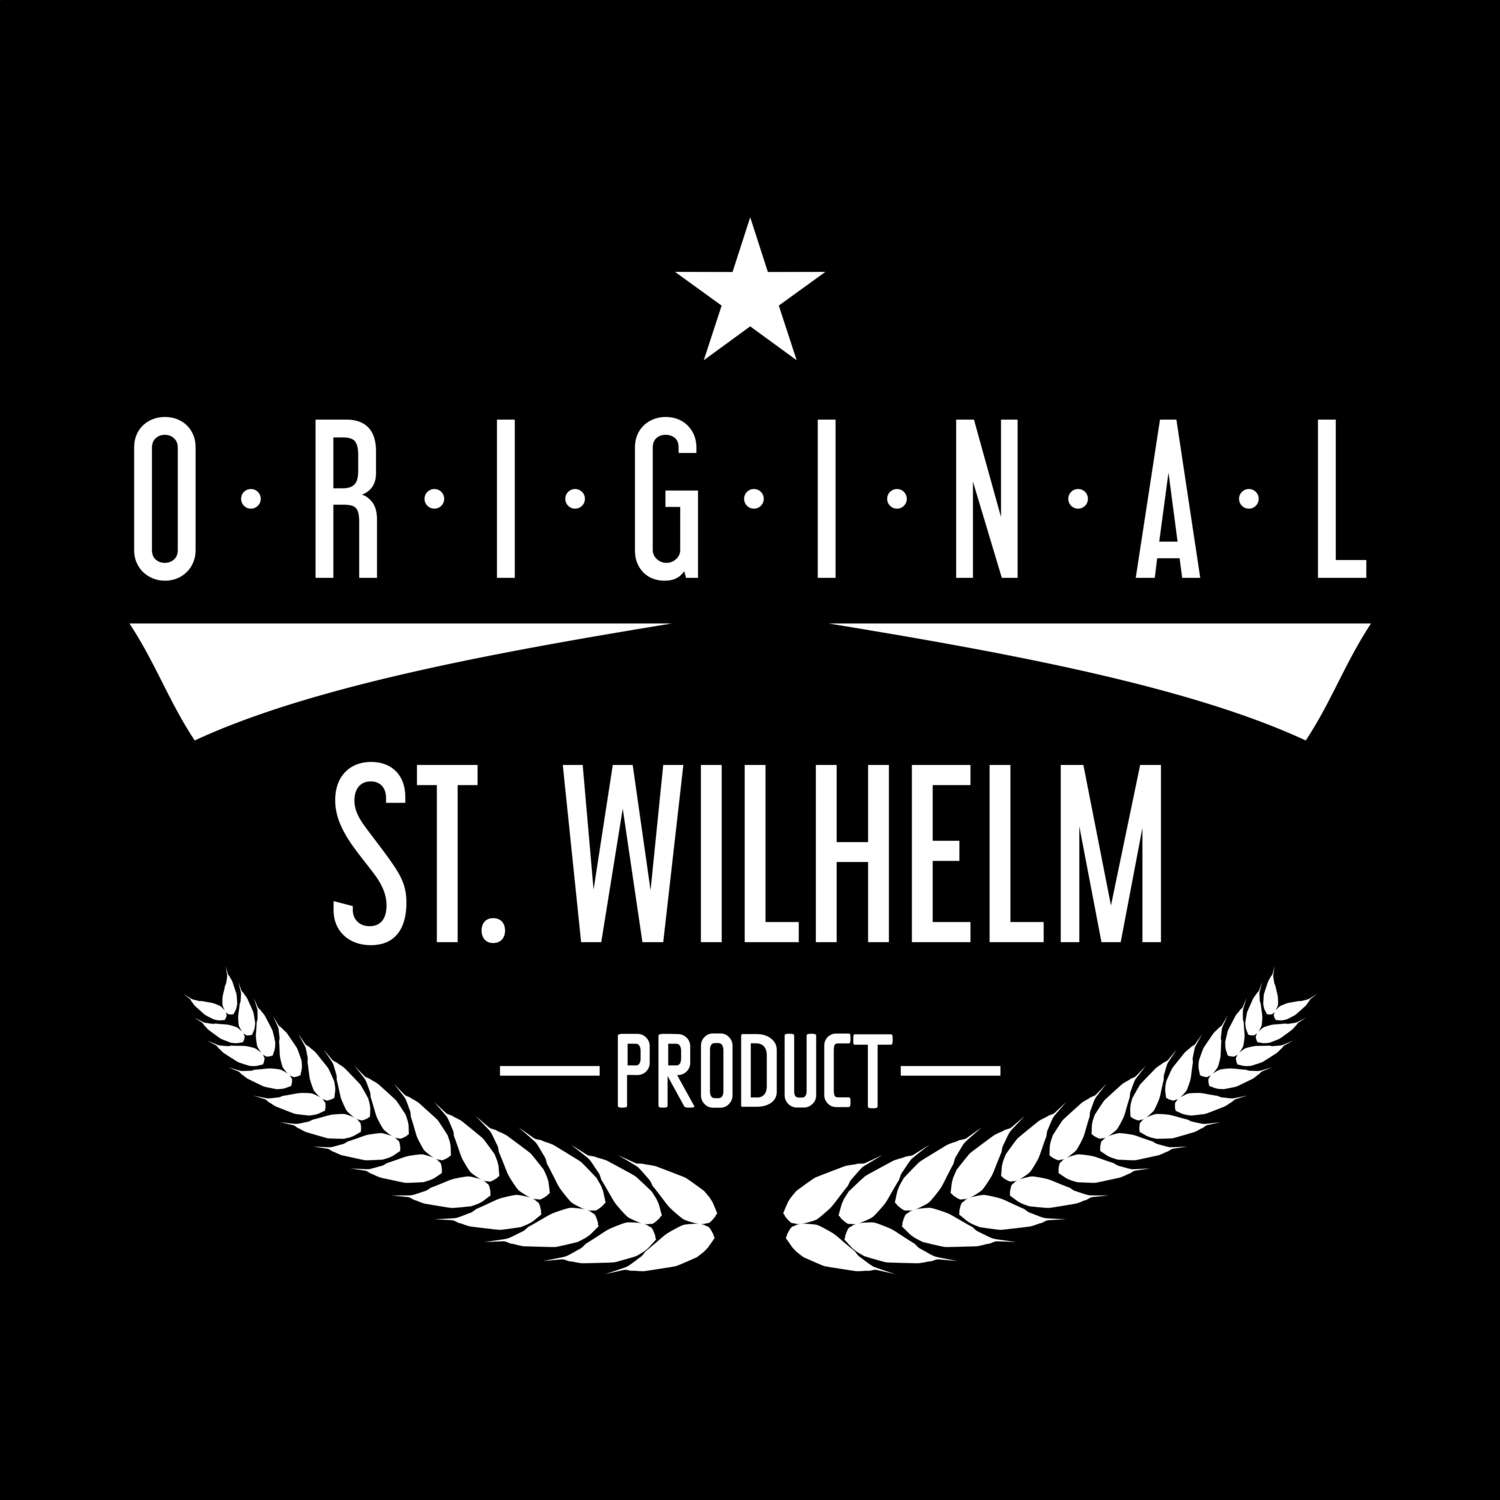 St. Wilhelm T-Shirt »Original Product«